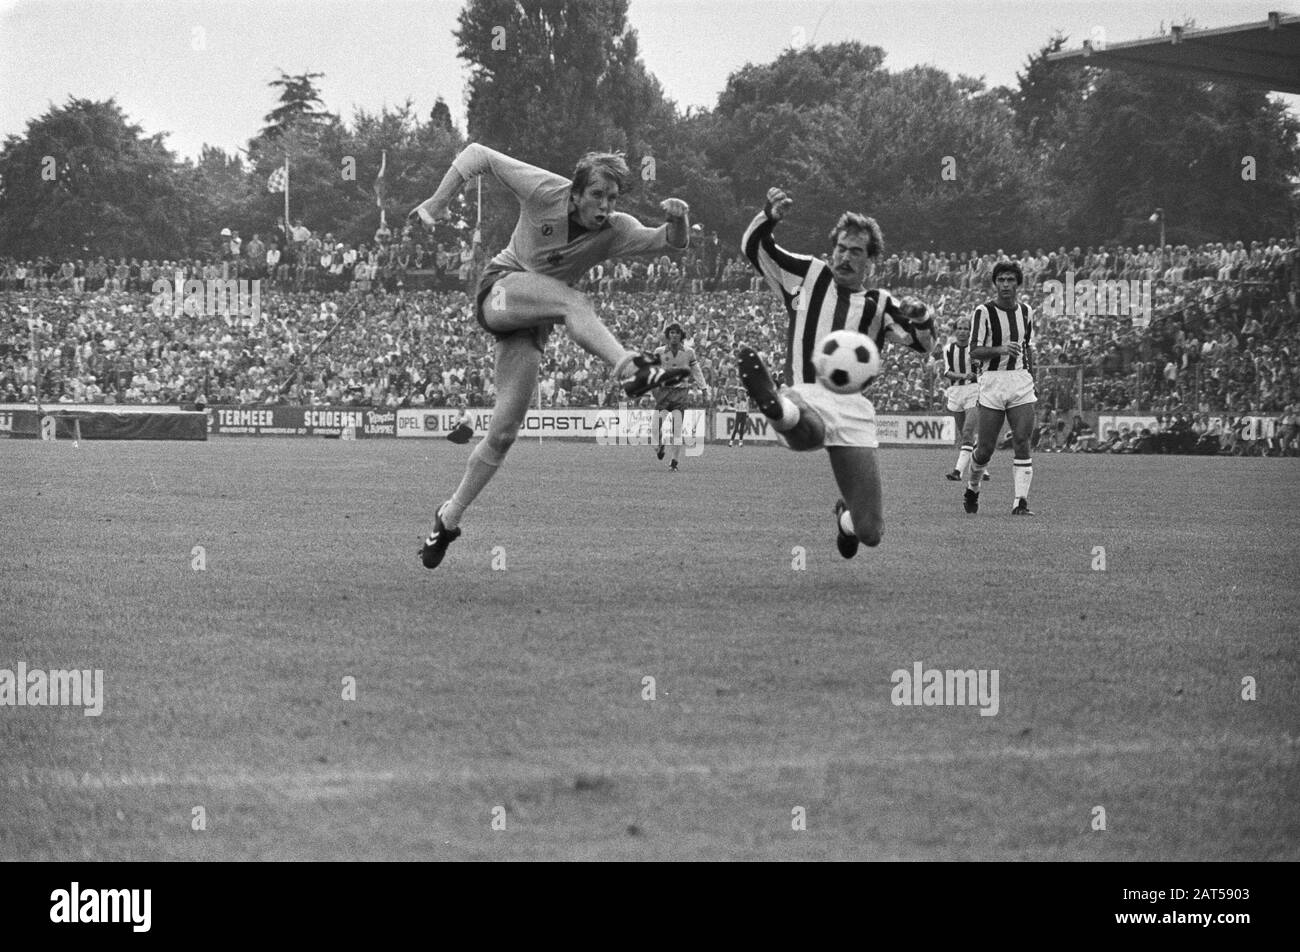 Willem II- Ajax 1-3; Jensen (left) opens the score for Ajax, Van de Ven  can't prevent this Date: August 19, 1979 Location: Noord-Brabant, Tilburg  Keywords: sport, football Person name : Jensen, Henning,